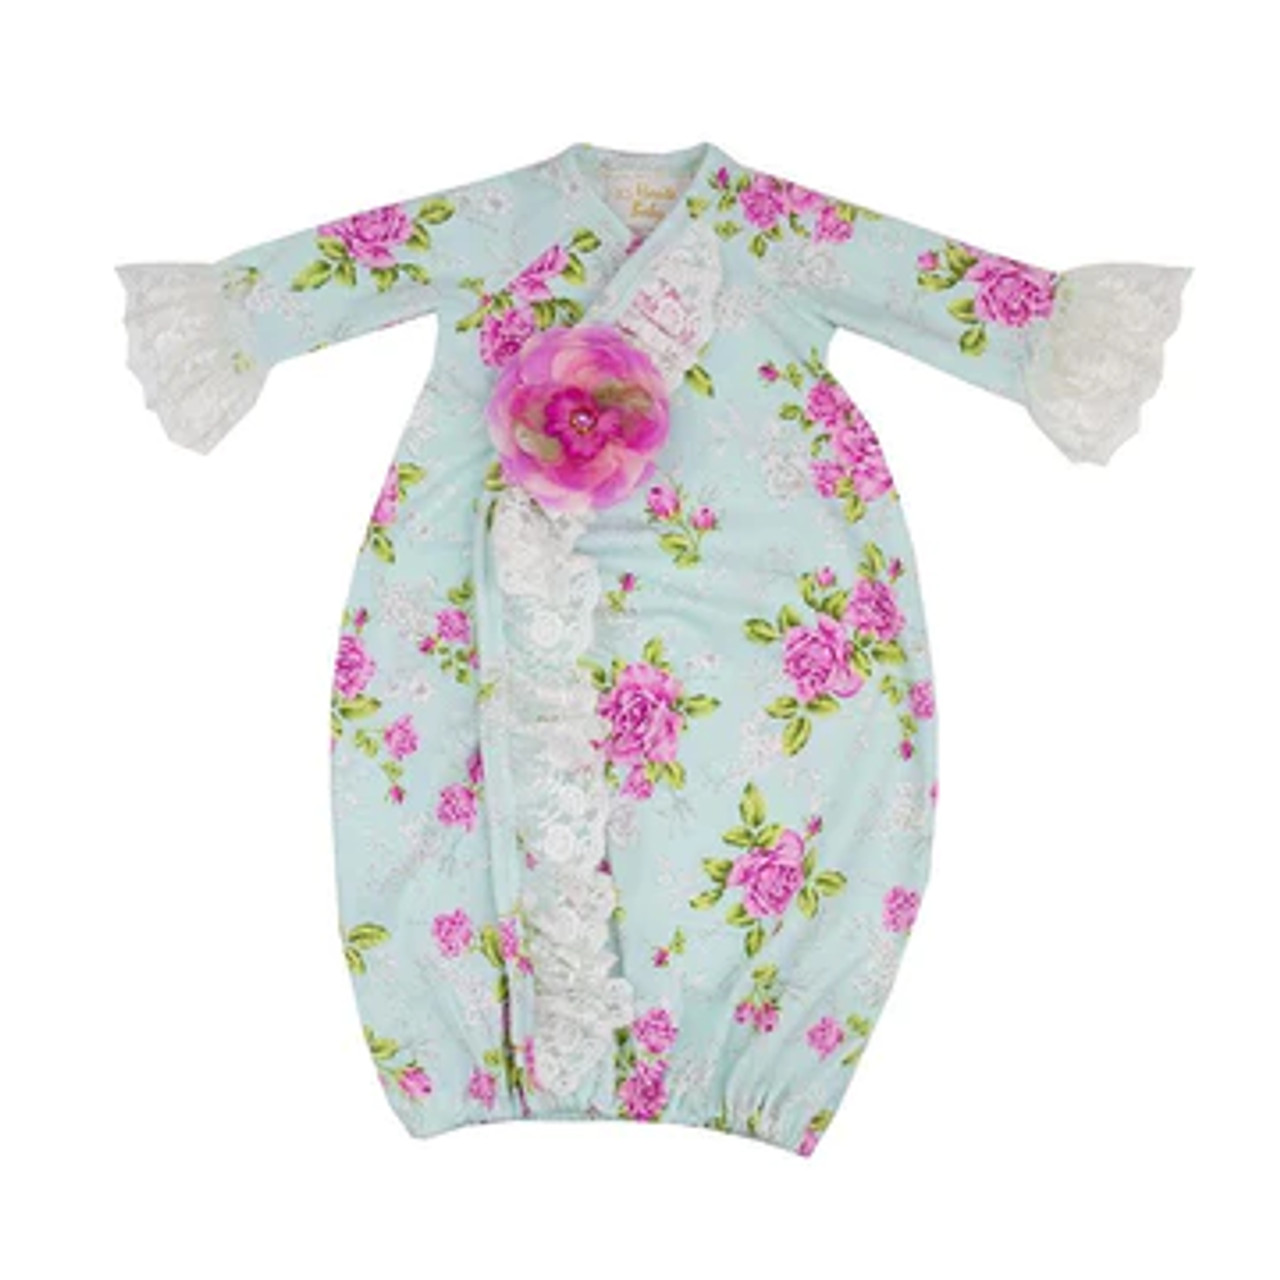 Bloomsbury Baby Gown